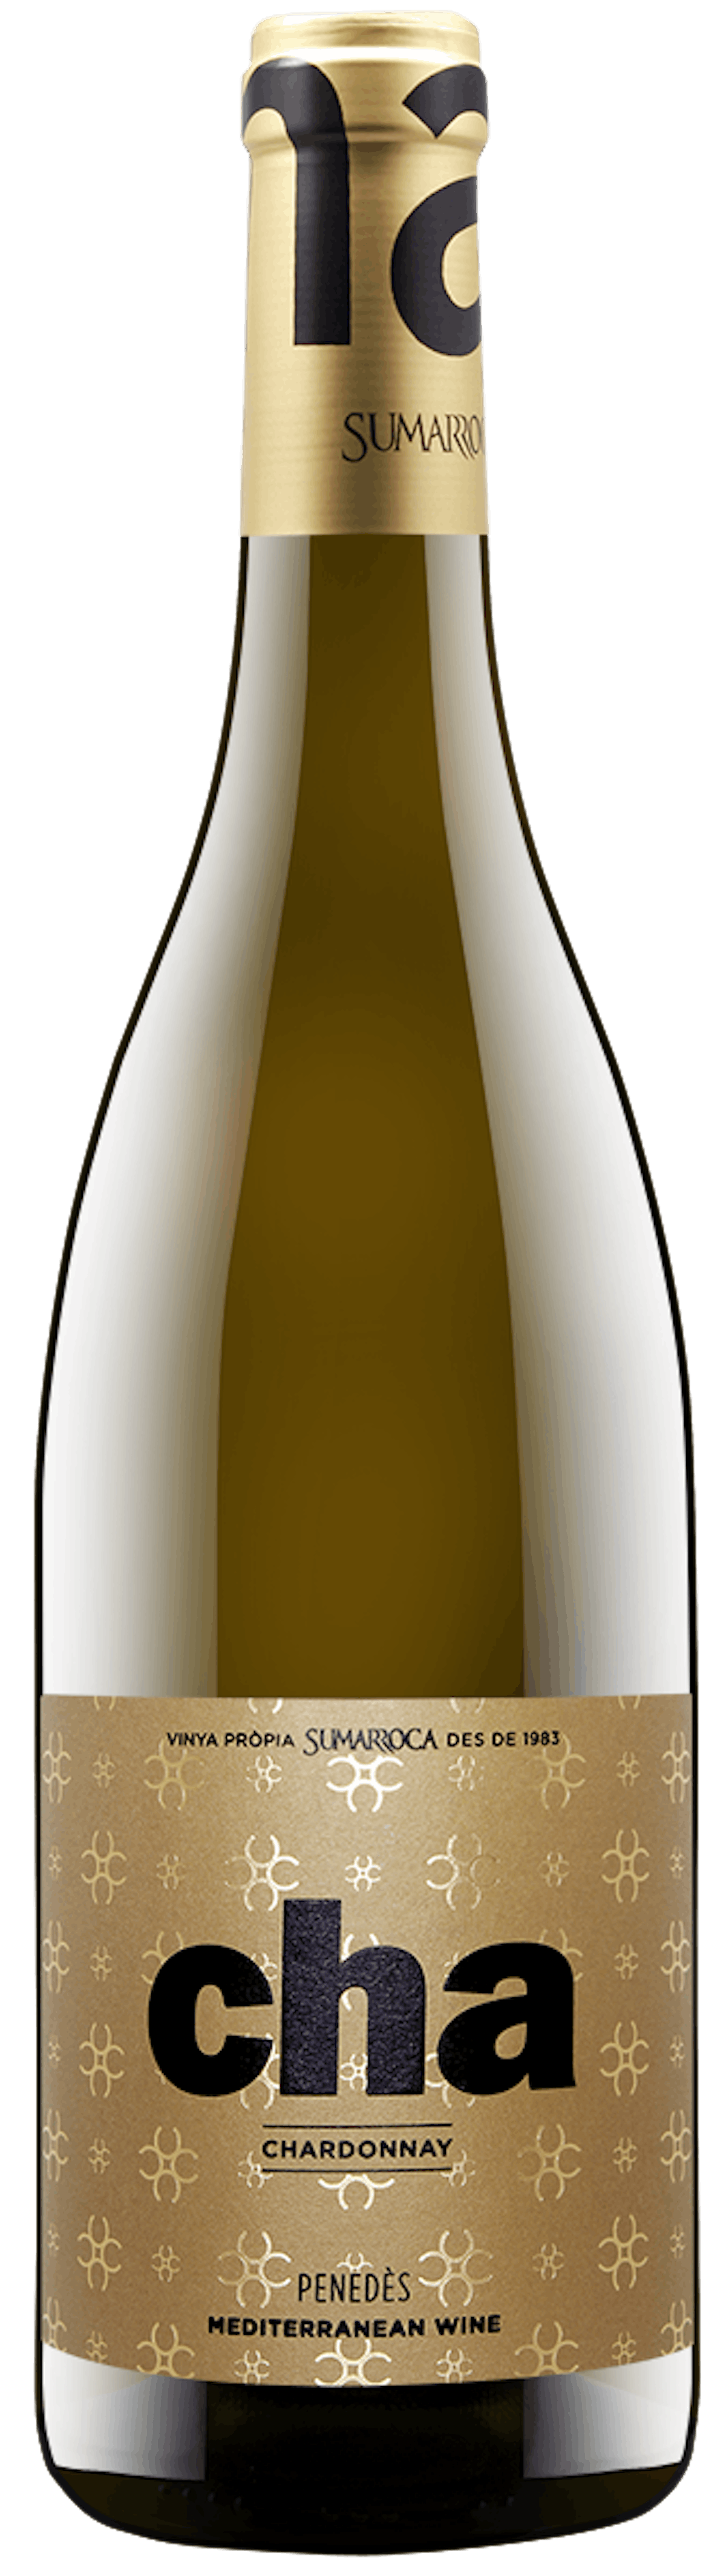 Cha Chardonnay